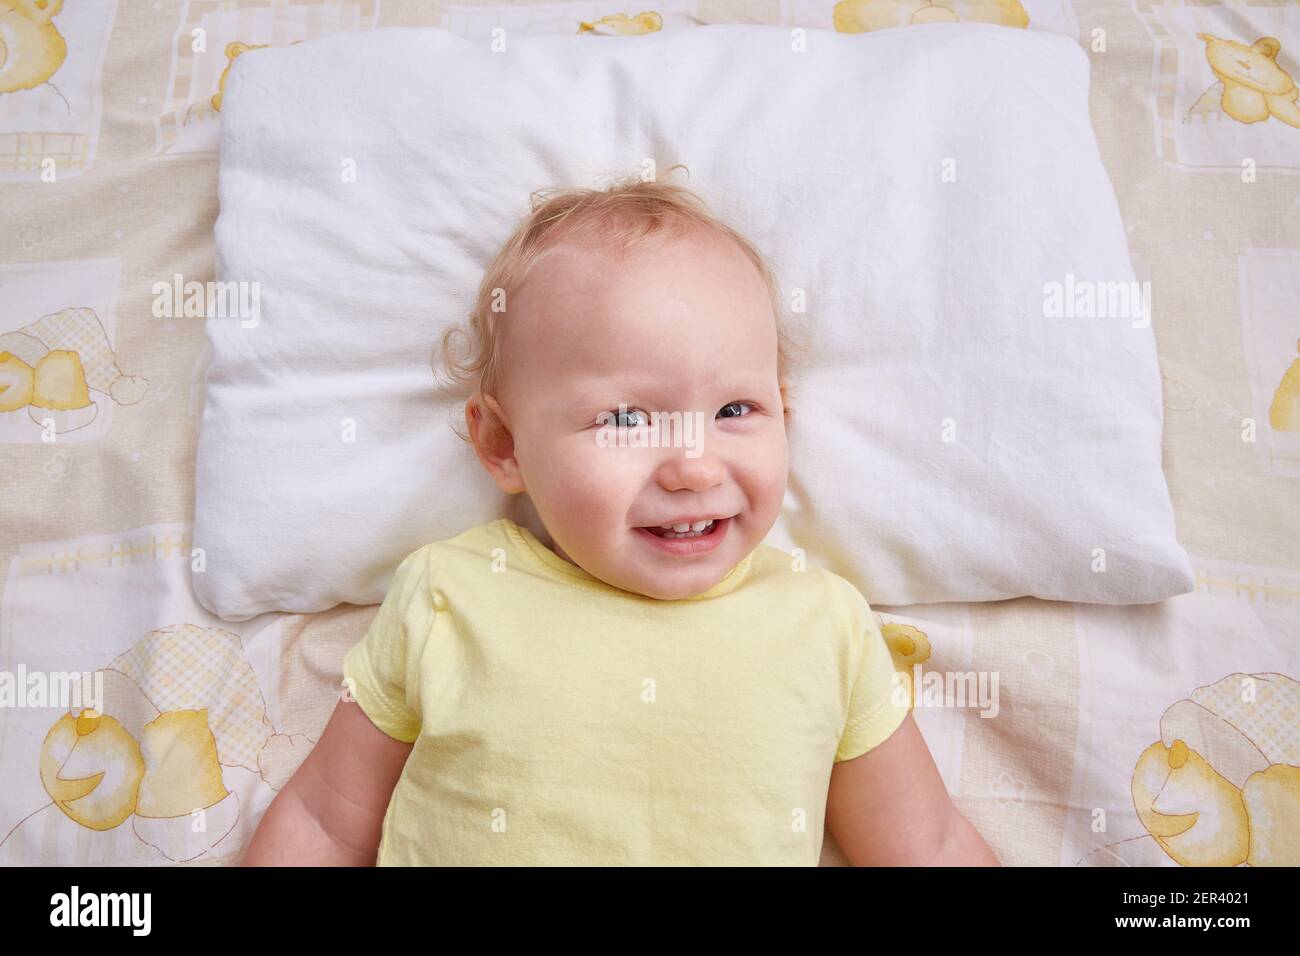 A smiling baby lies on a white pillow. pillowcase mockup. Stock Photo